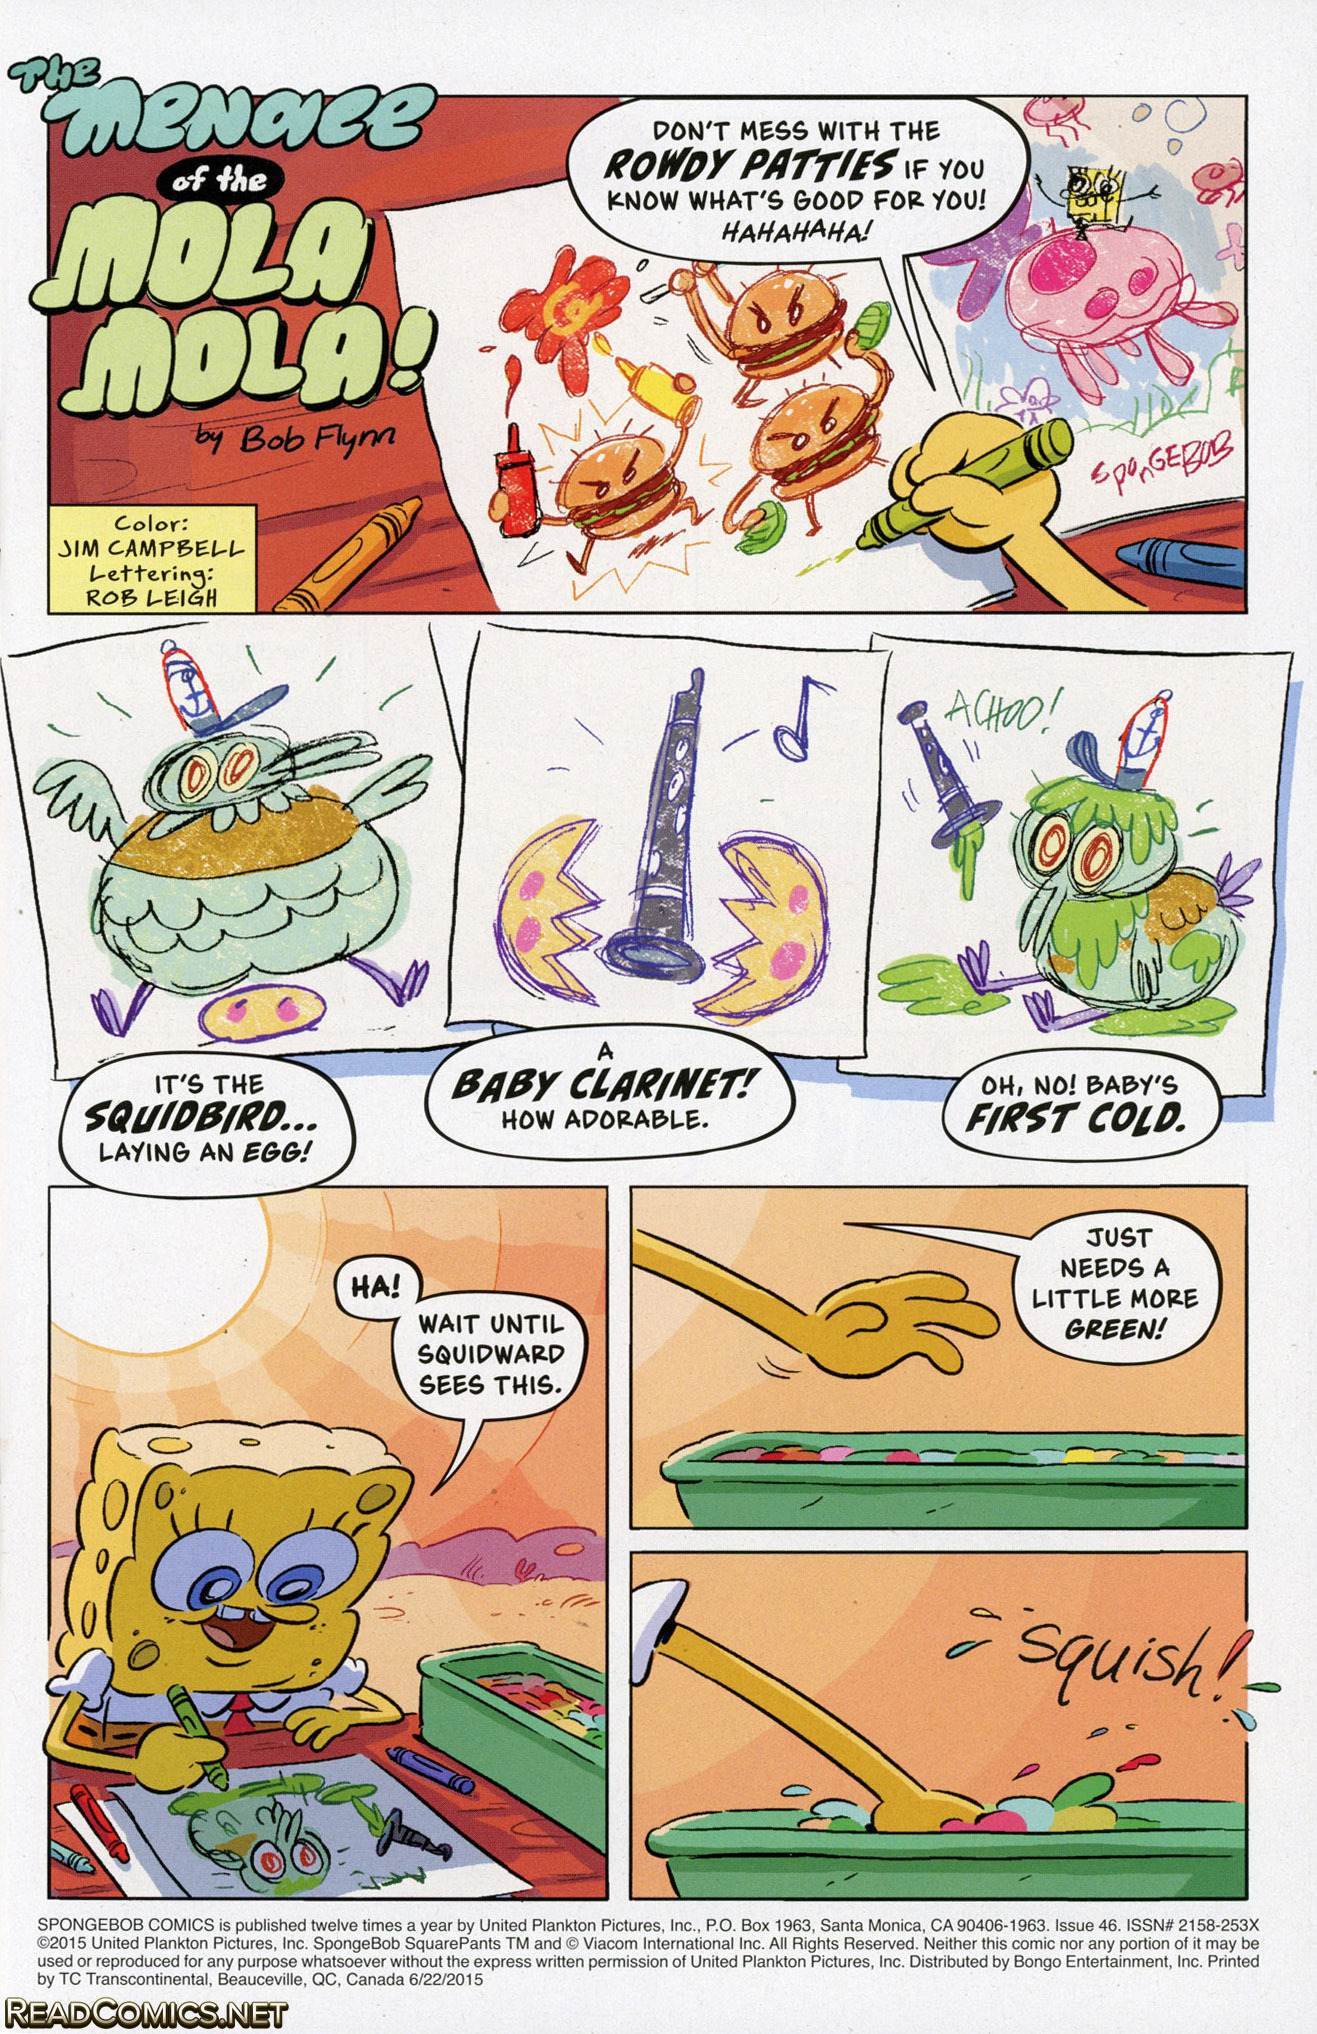 SpongeBob Comics (2011-): Chapter 46 - Page 3